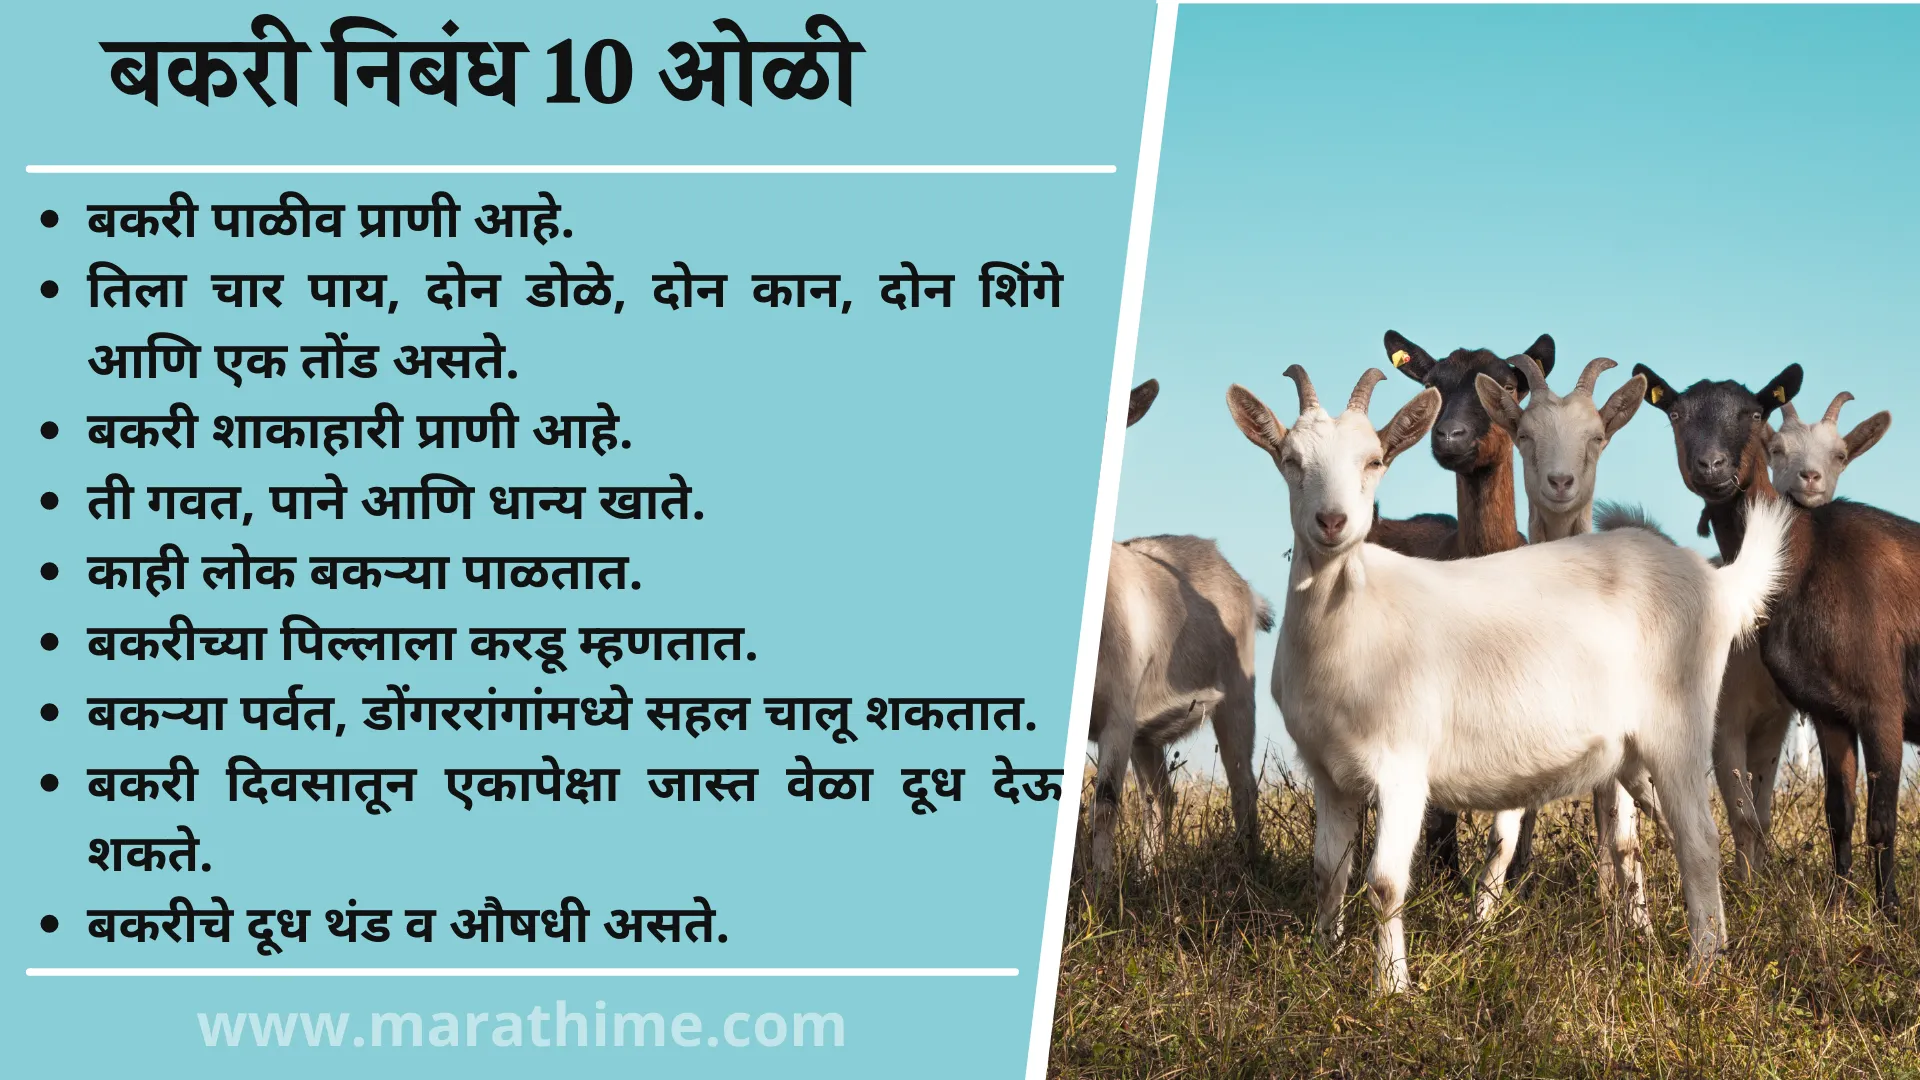 बकरी निबंध 10 ओळी, 10 Lines On Goat in Marathi